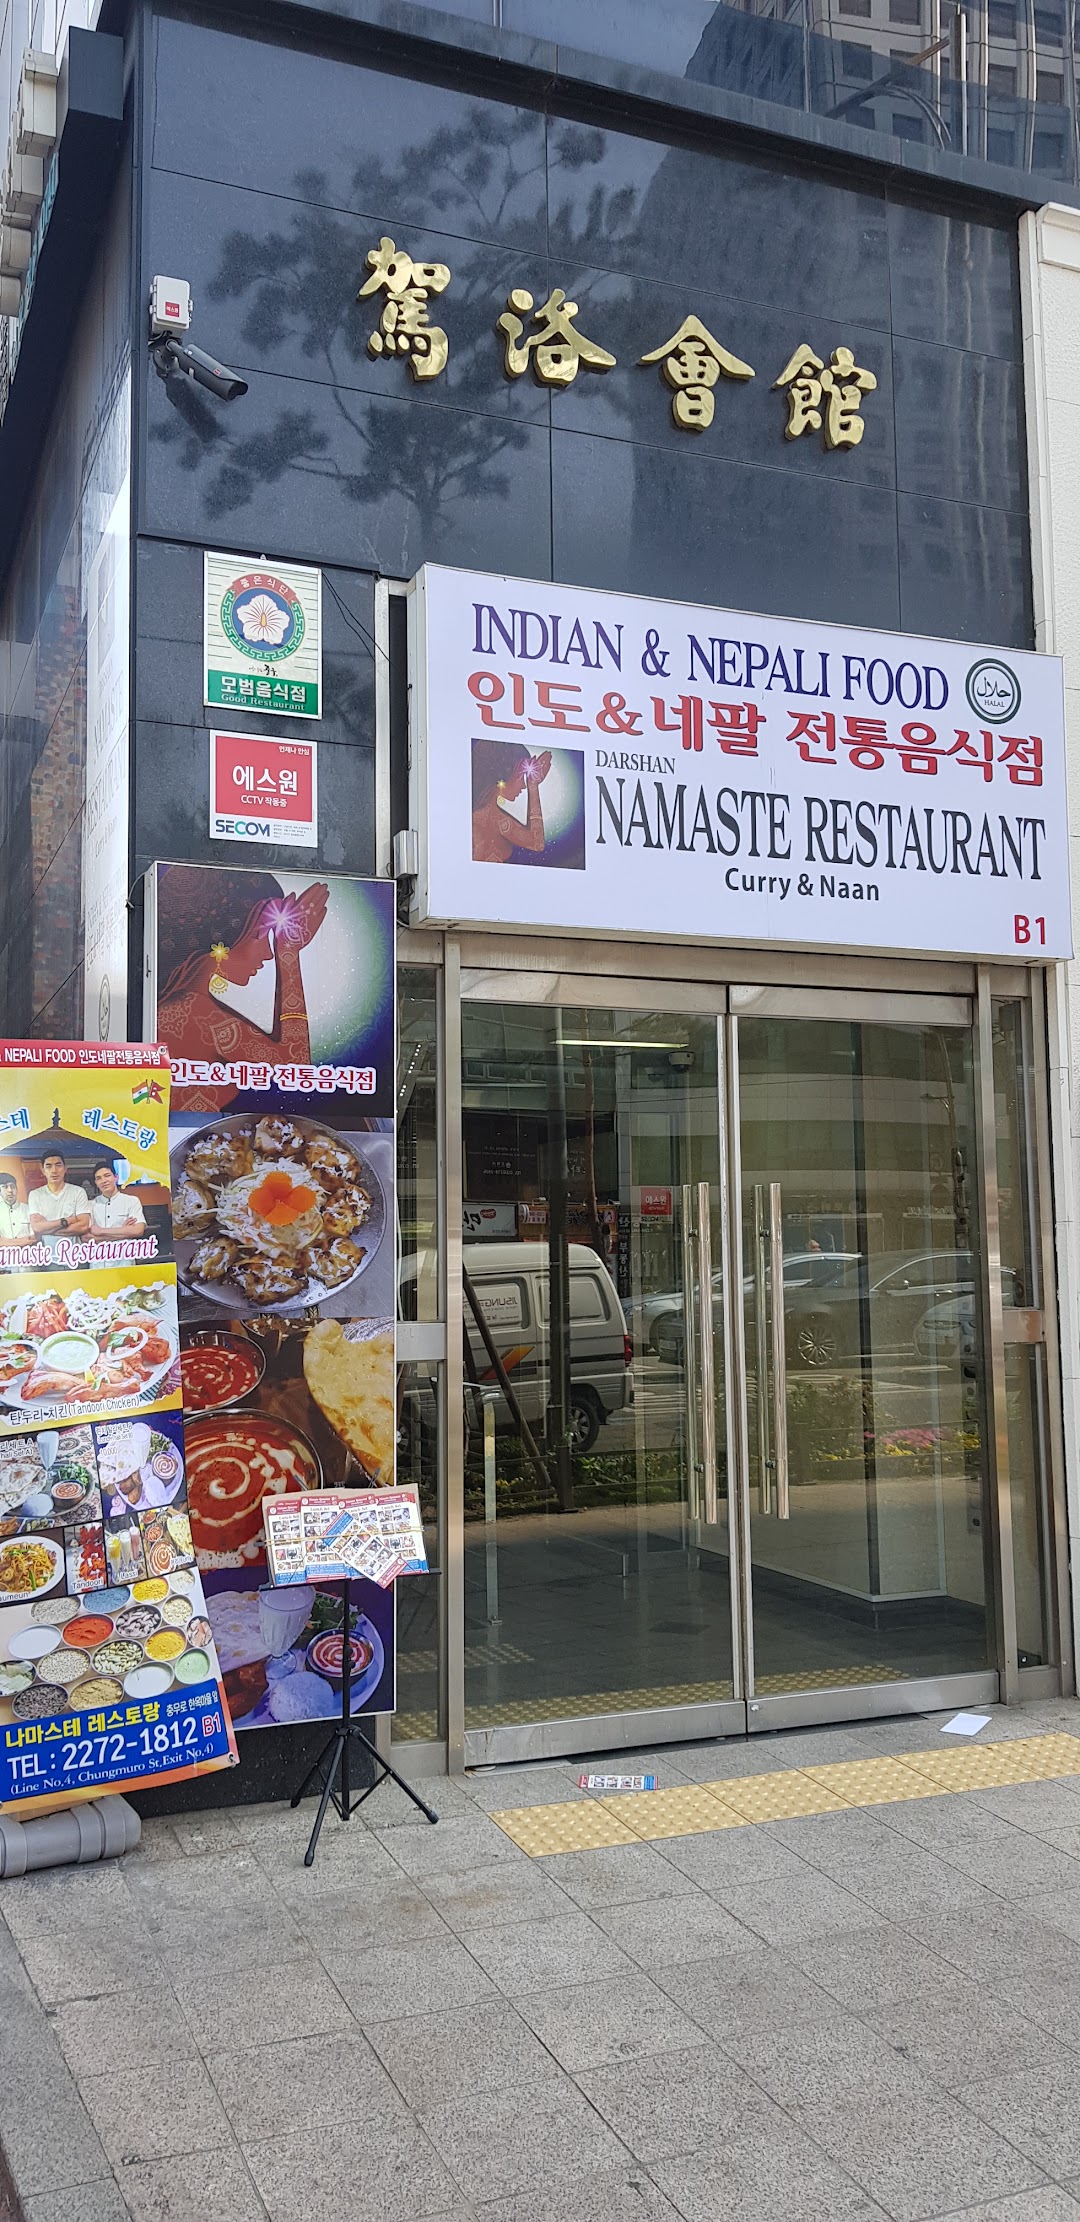 Namaste Restaurant (Indian & Neapli Food)